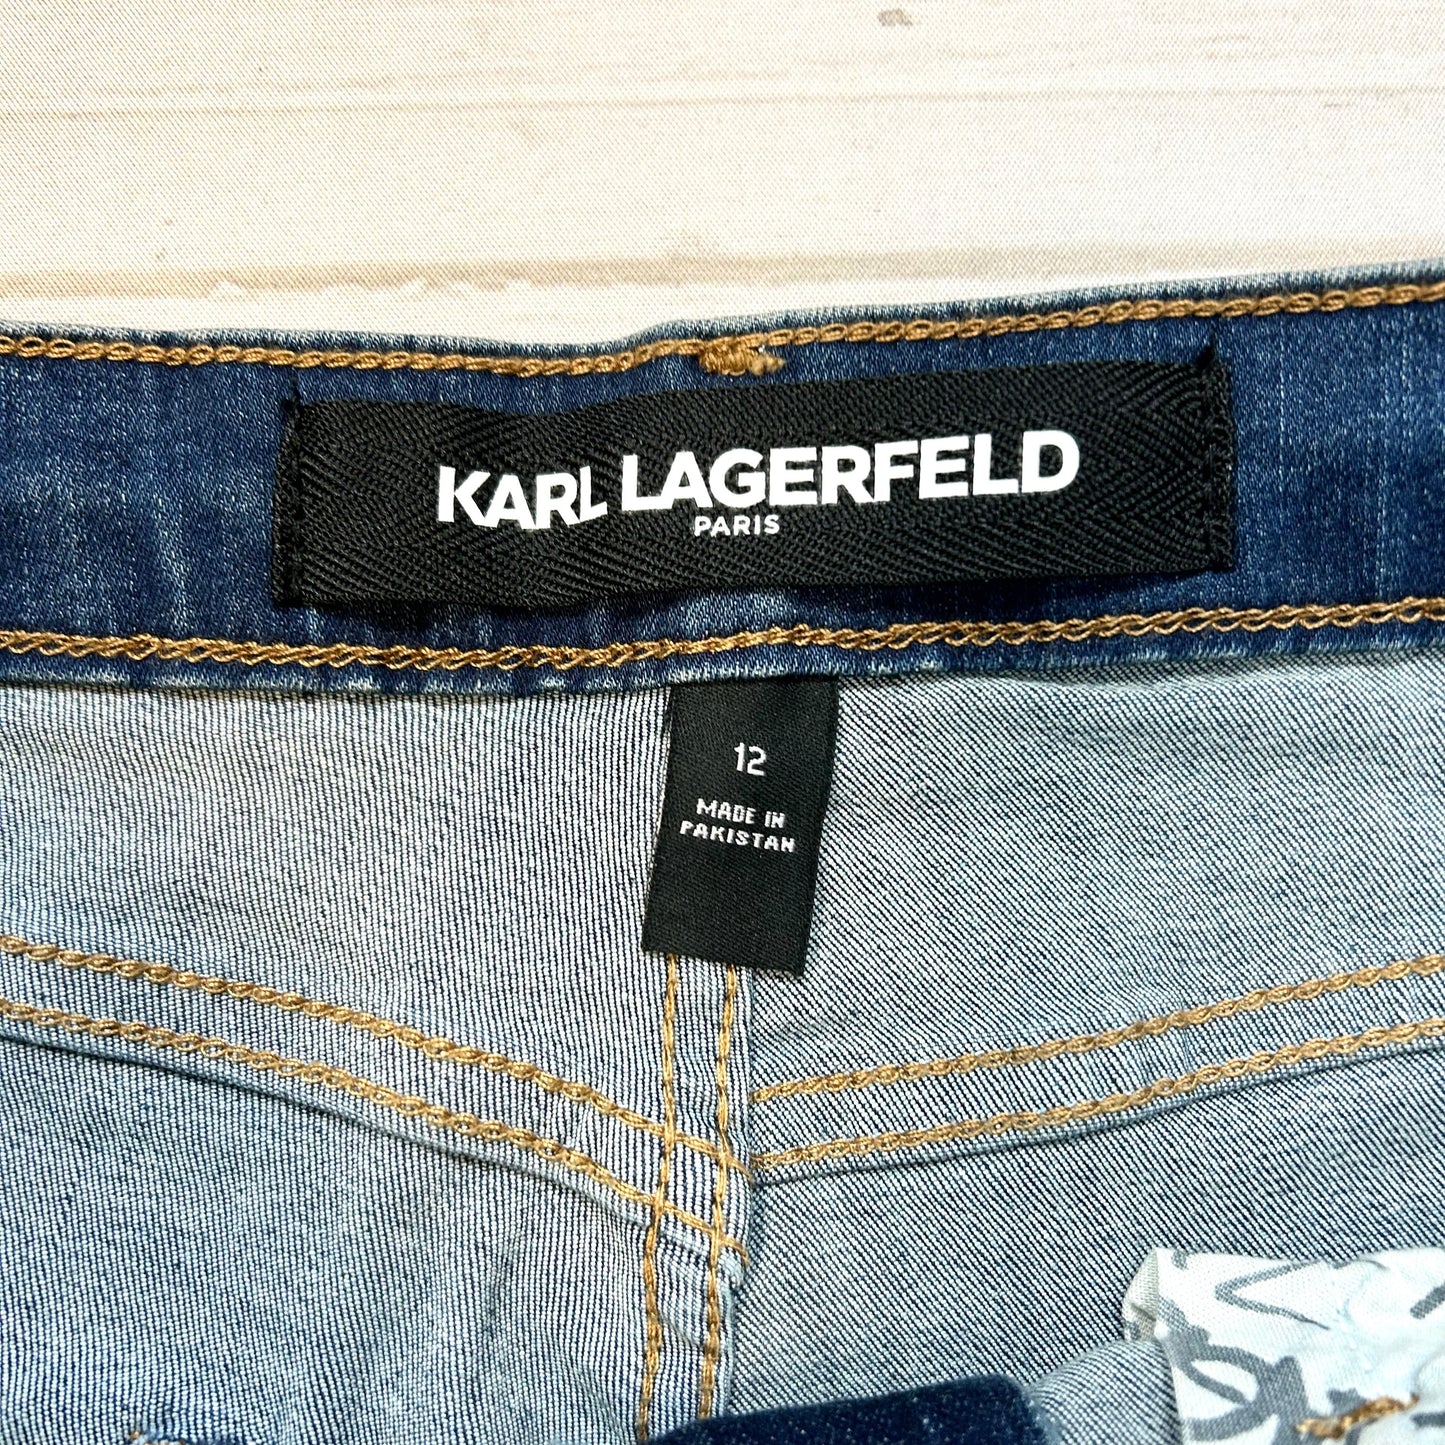 Jeans Designer By Karl Lagerfeld  Size: 12